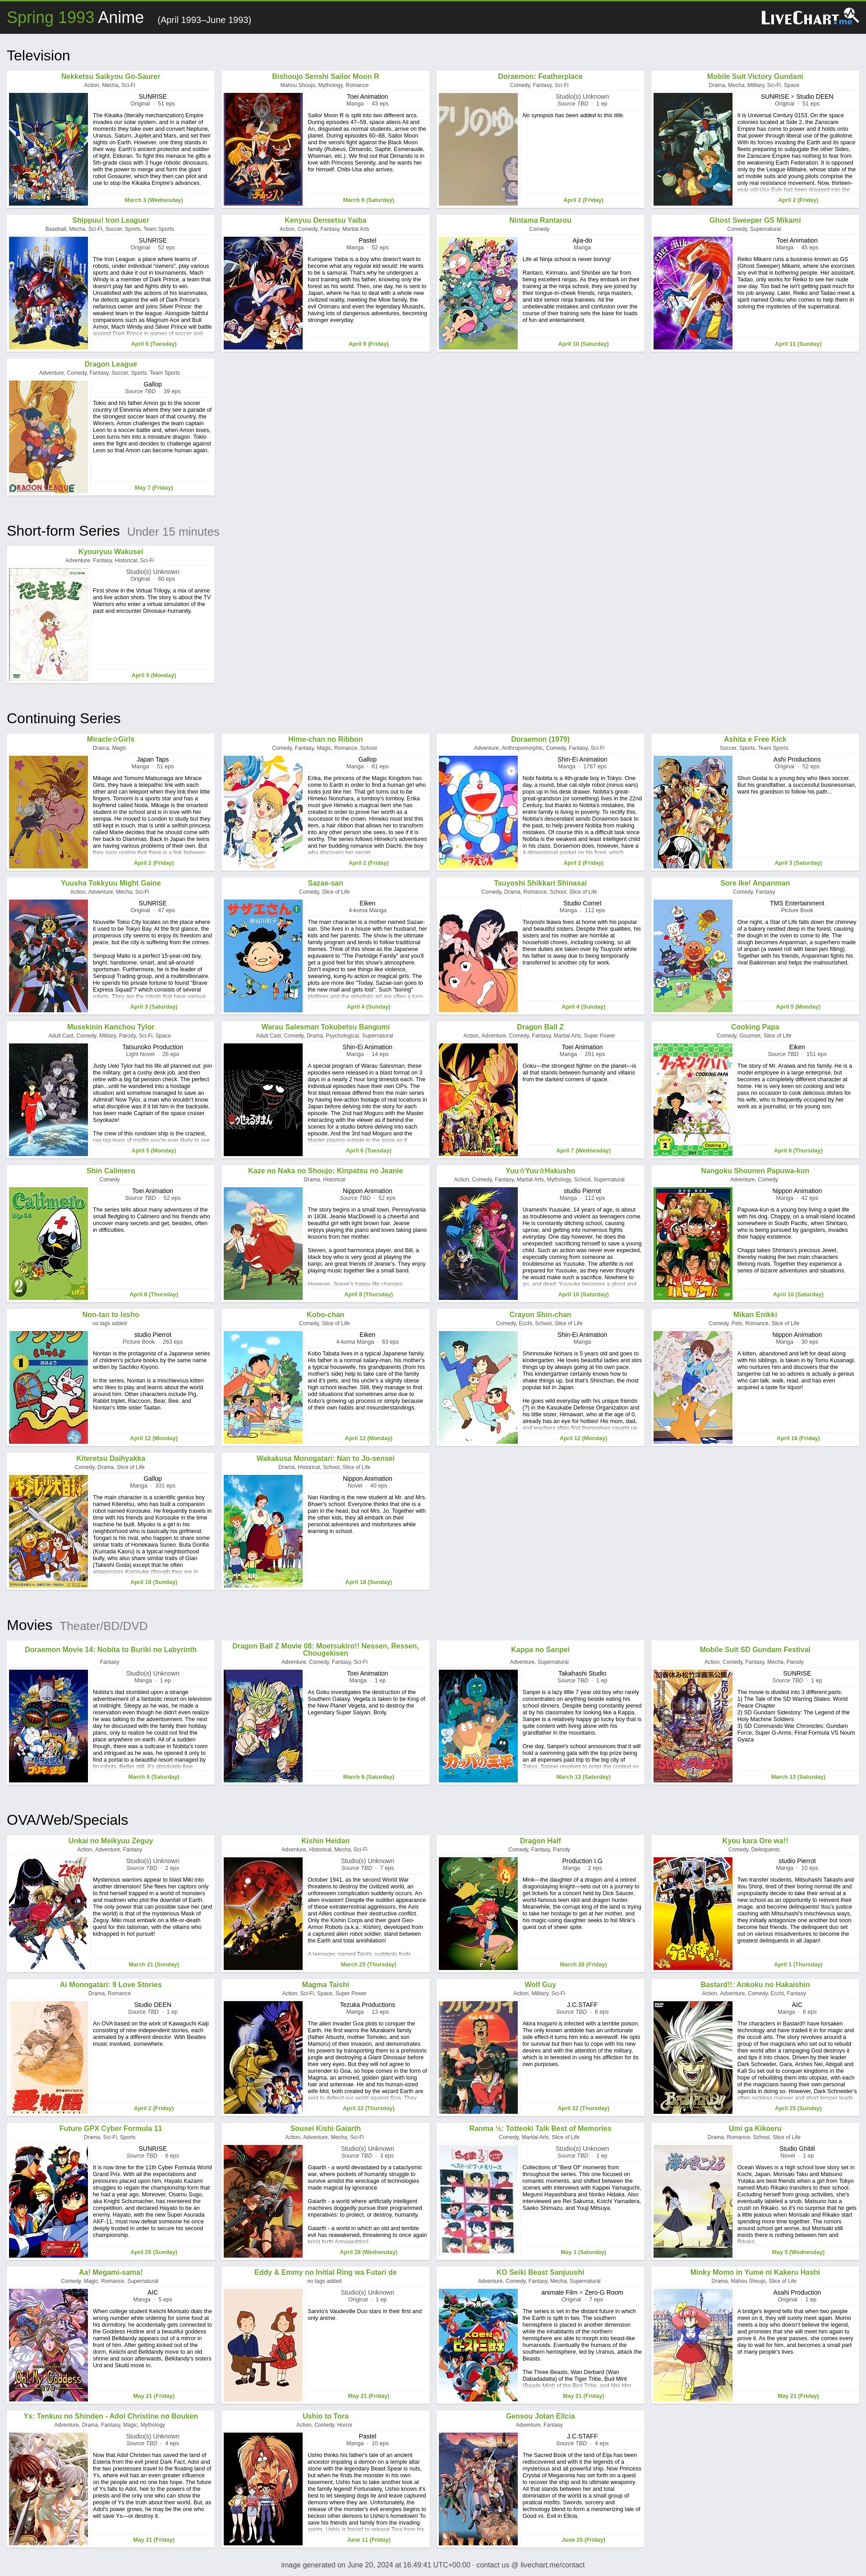 1993 Anime Chart